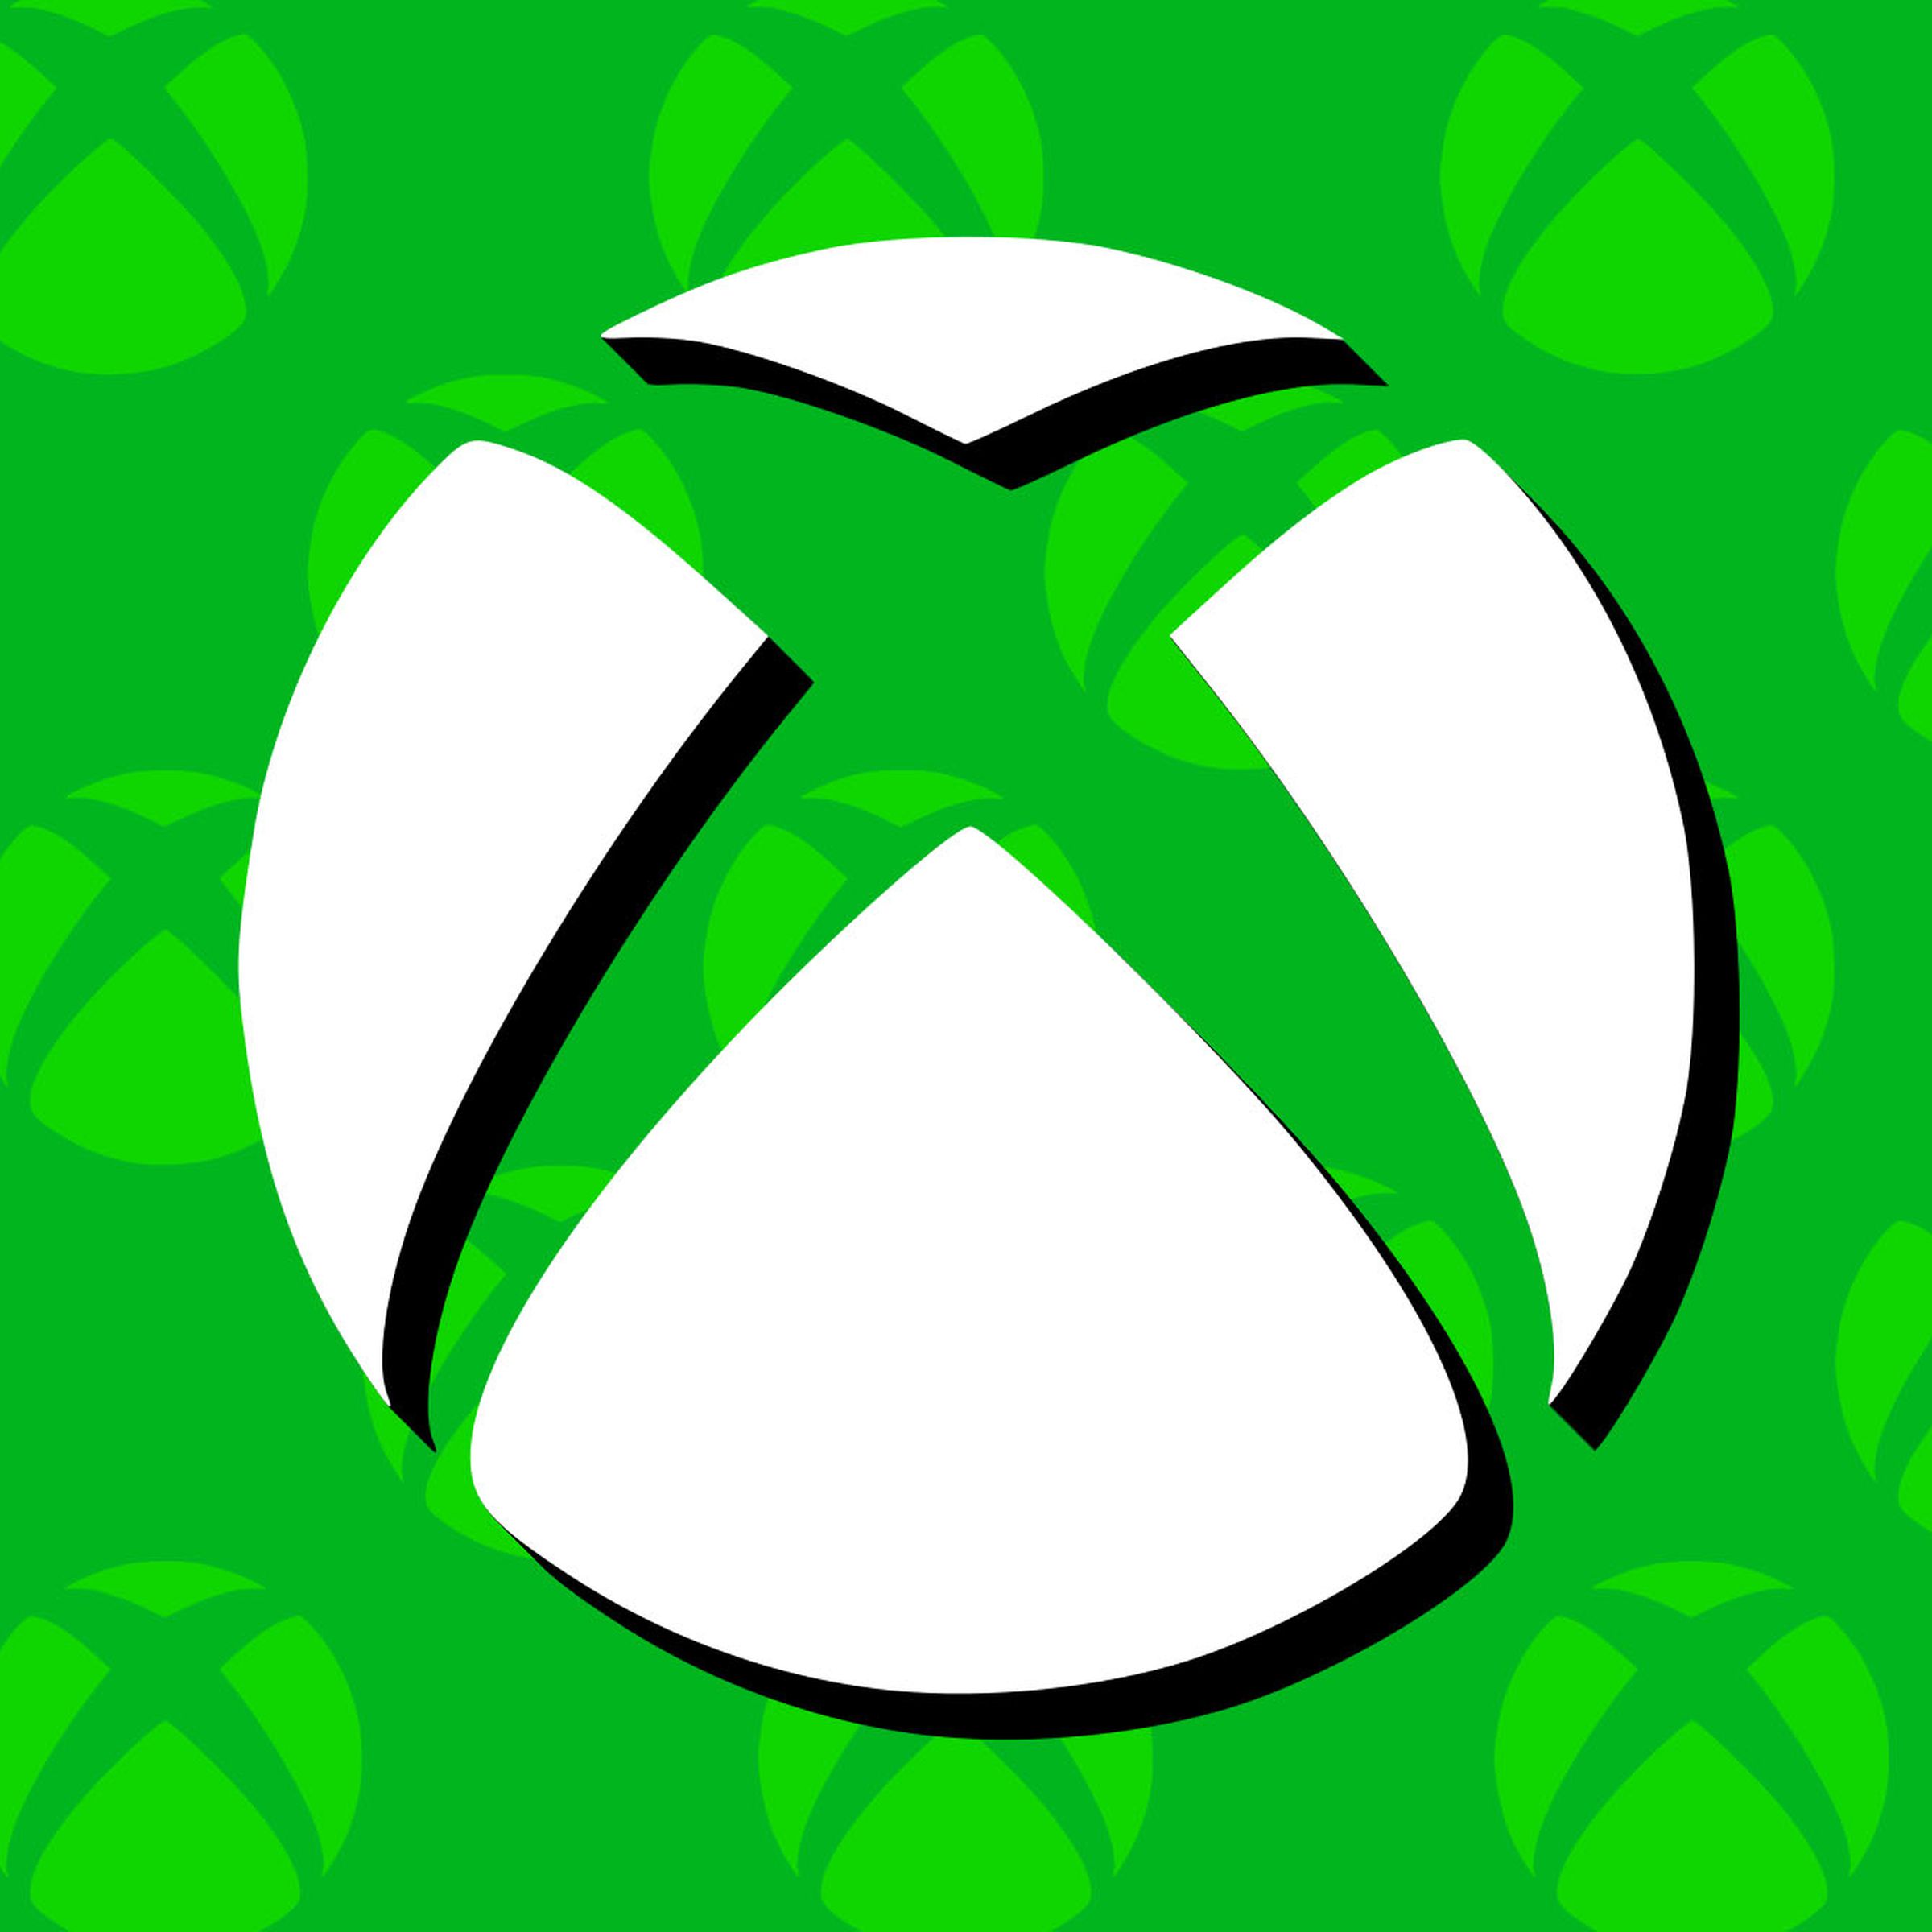 Vector illustration of the Xbox logo.